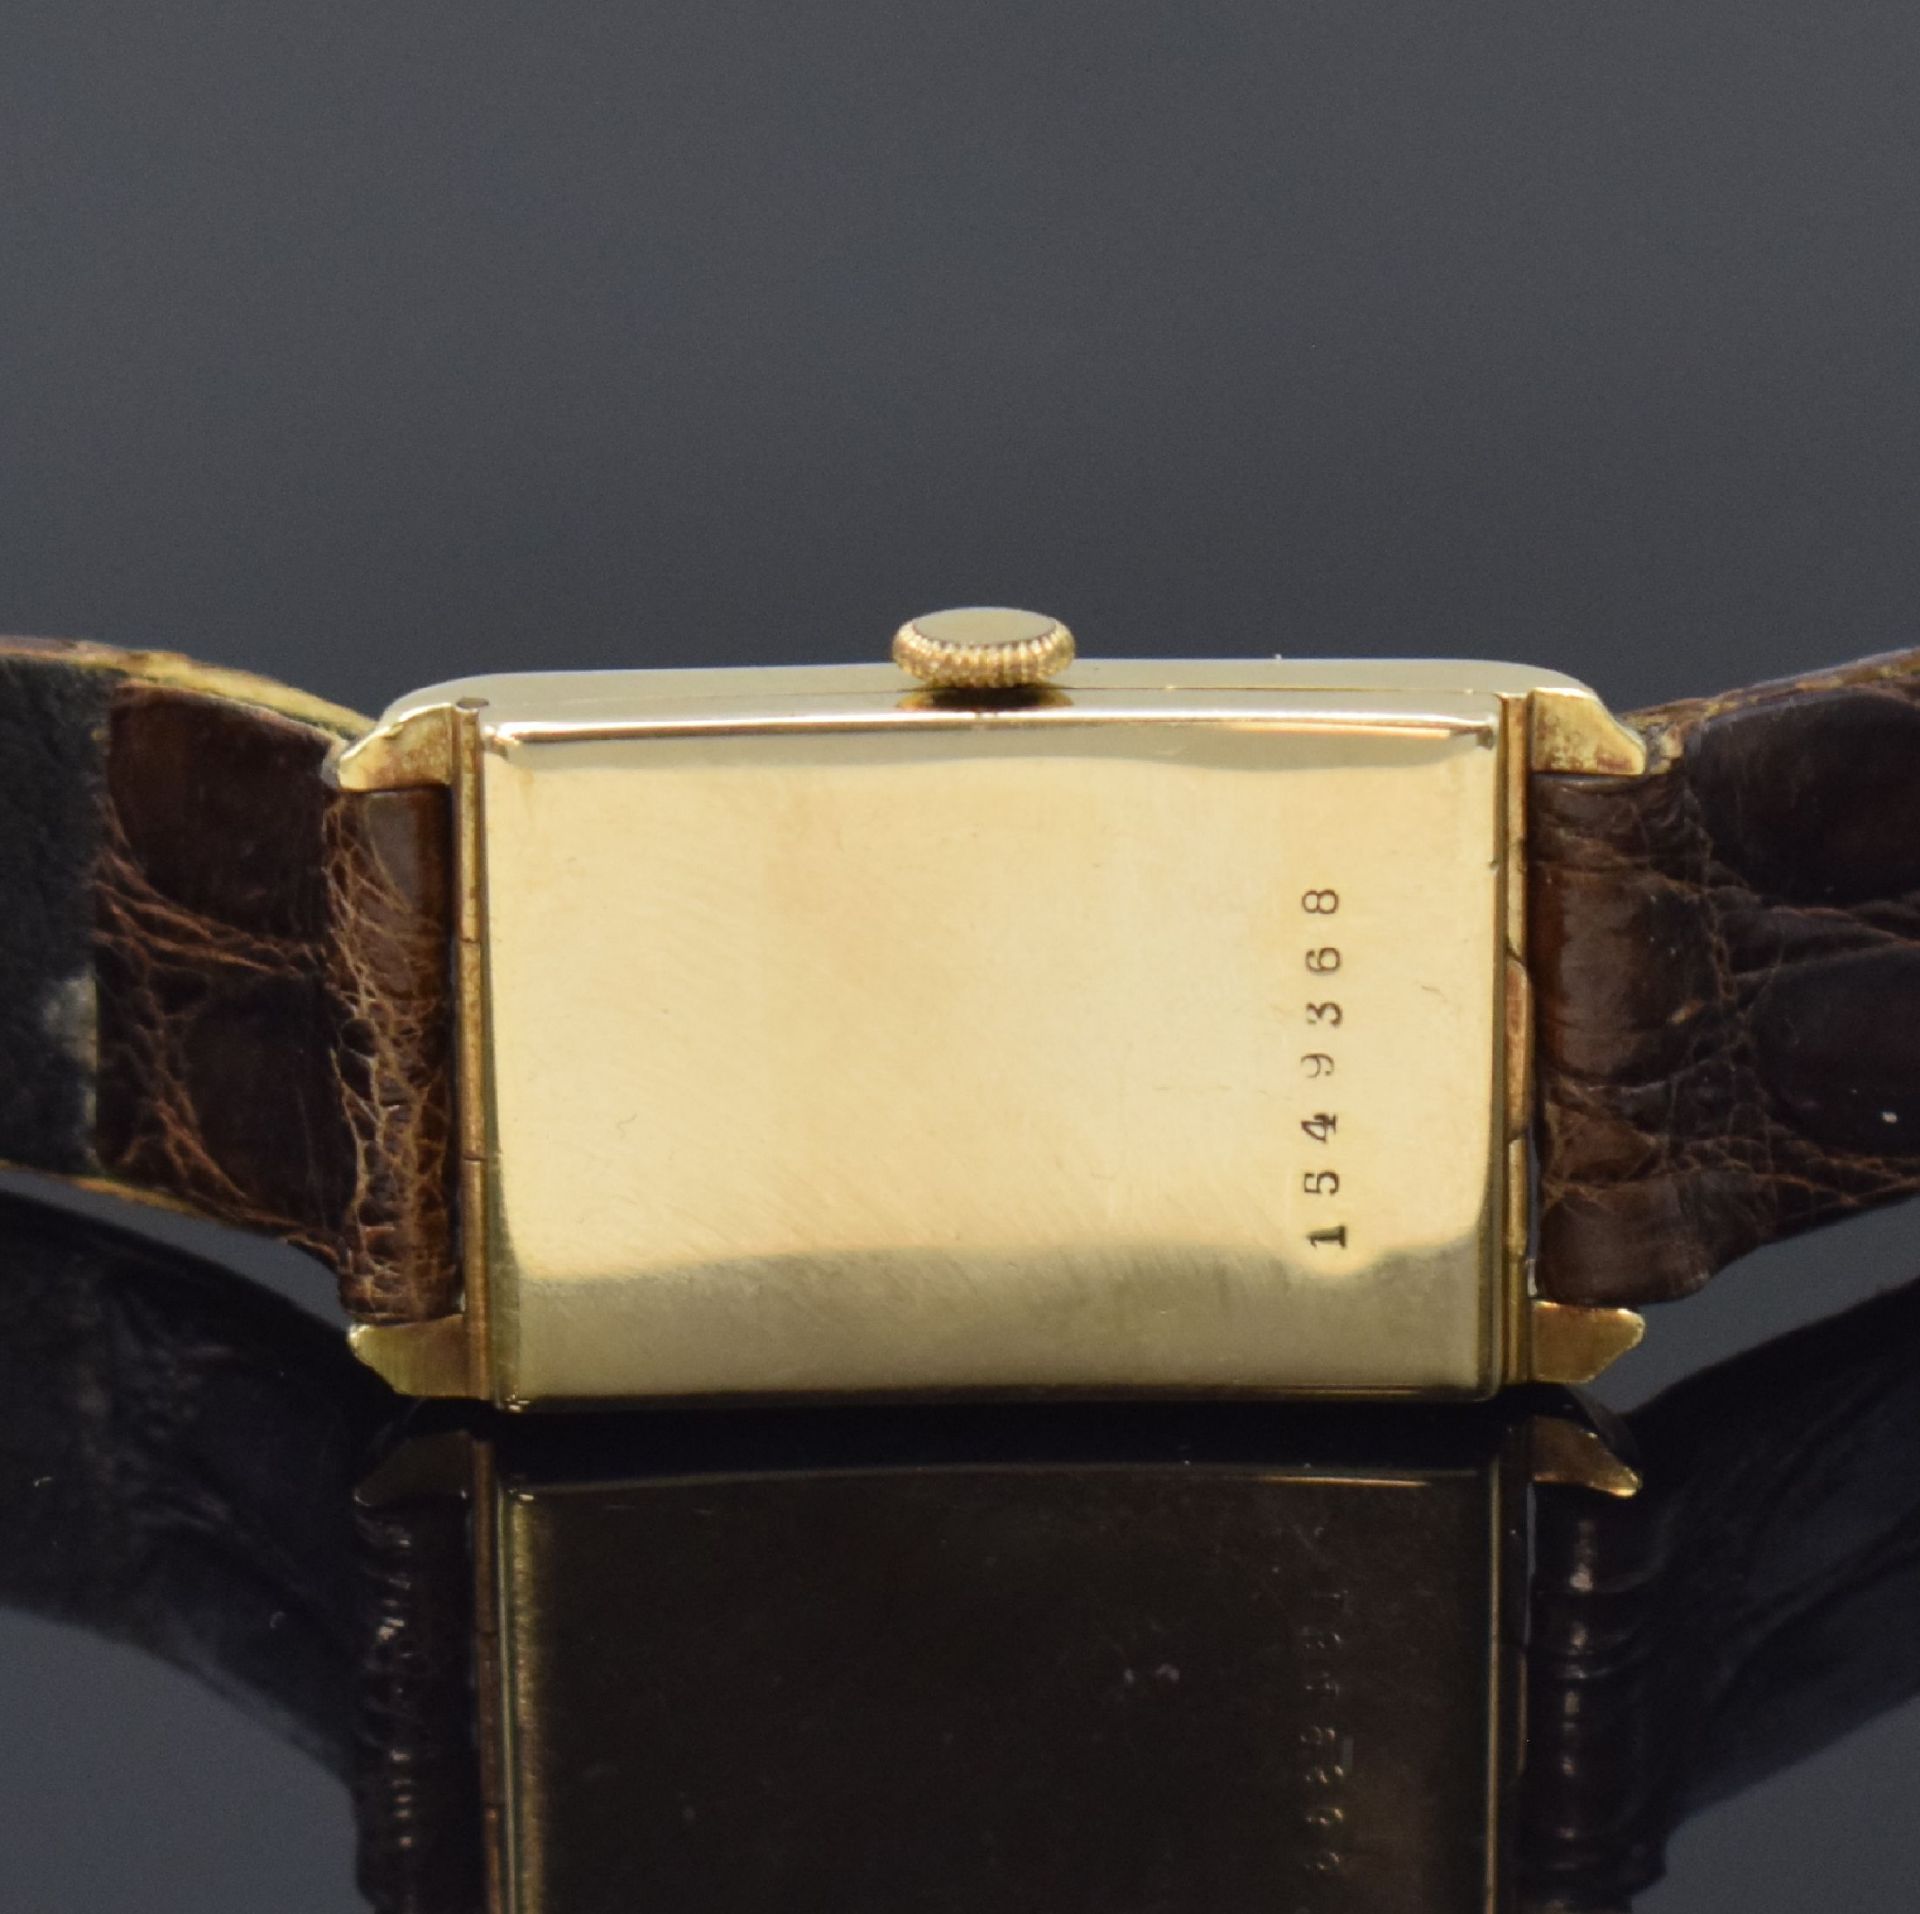 CHRIST seltene digitale Armbanduhr in GG 585/000, Schweiz - Image 4 of 7